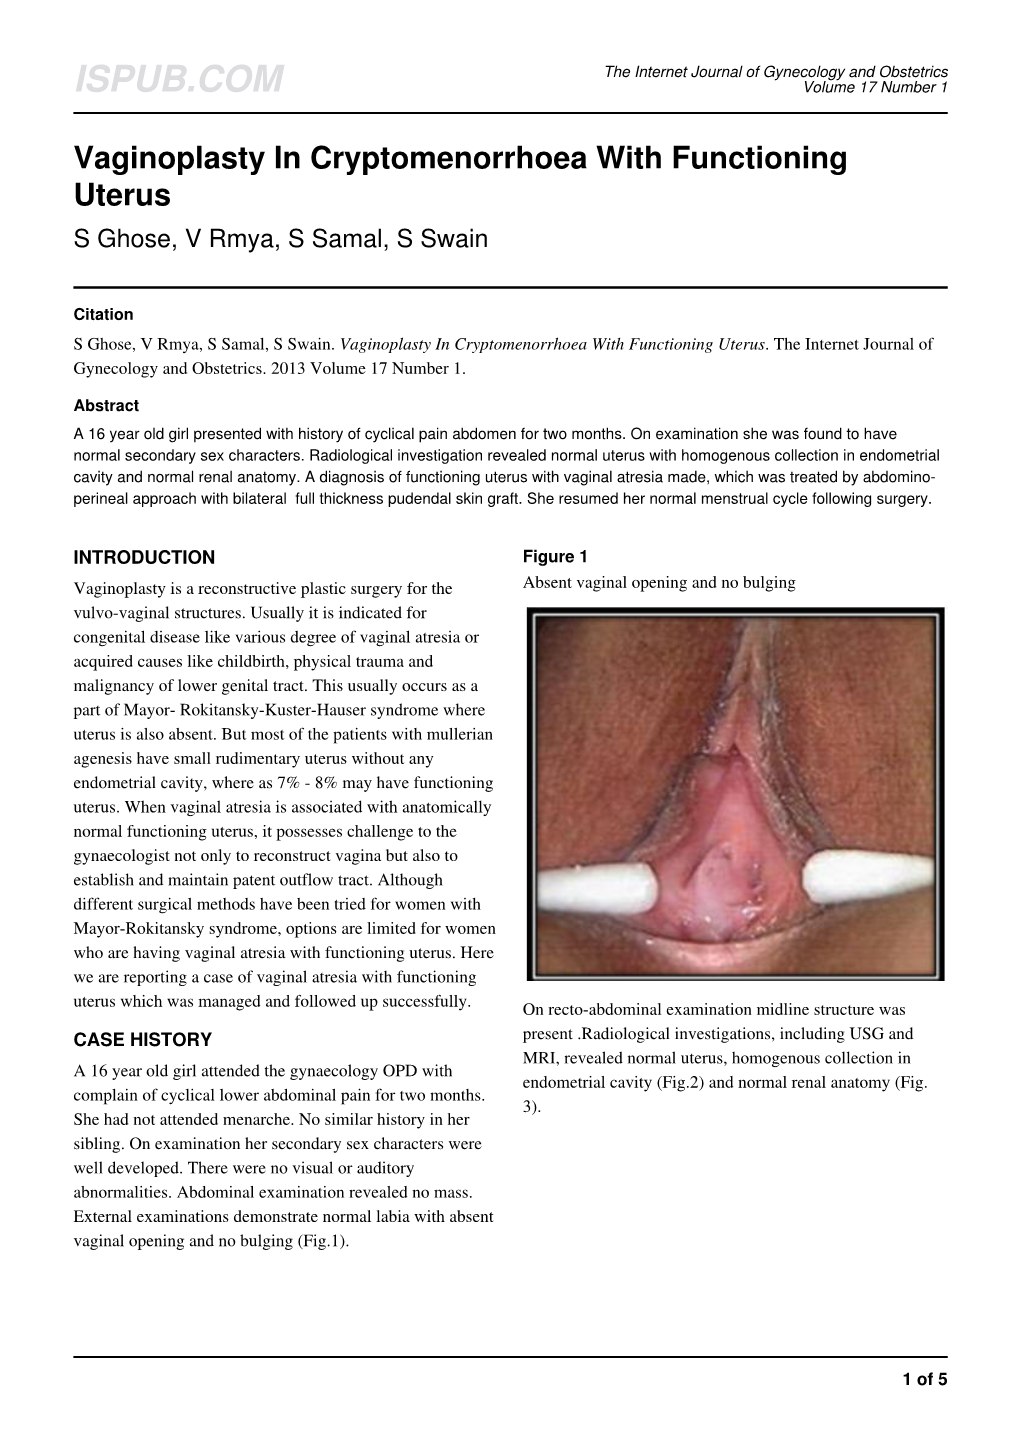 Vaginoplasty in Cryptomenorrhoea with Functioning Uterus S Ghose, V Rmya, S Samal, S Swain